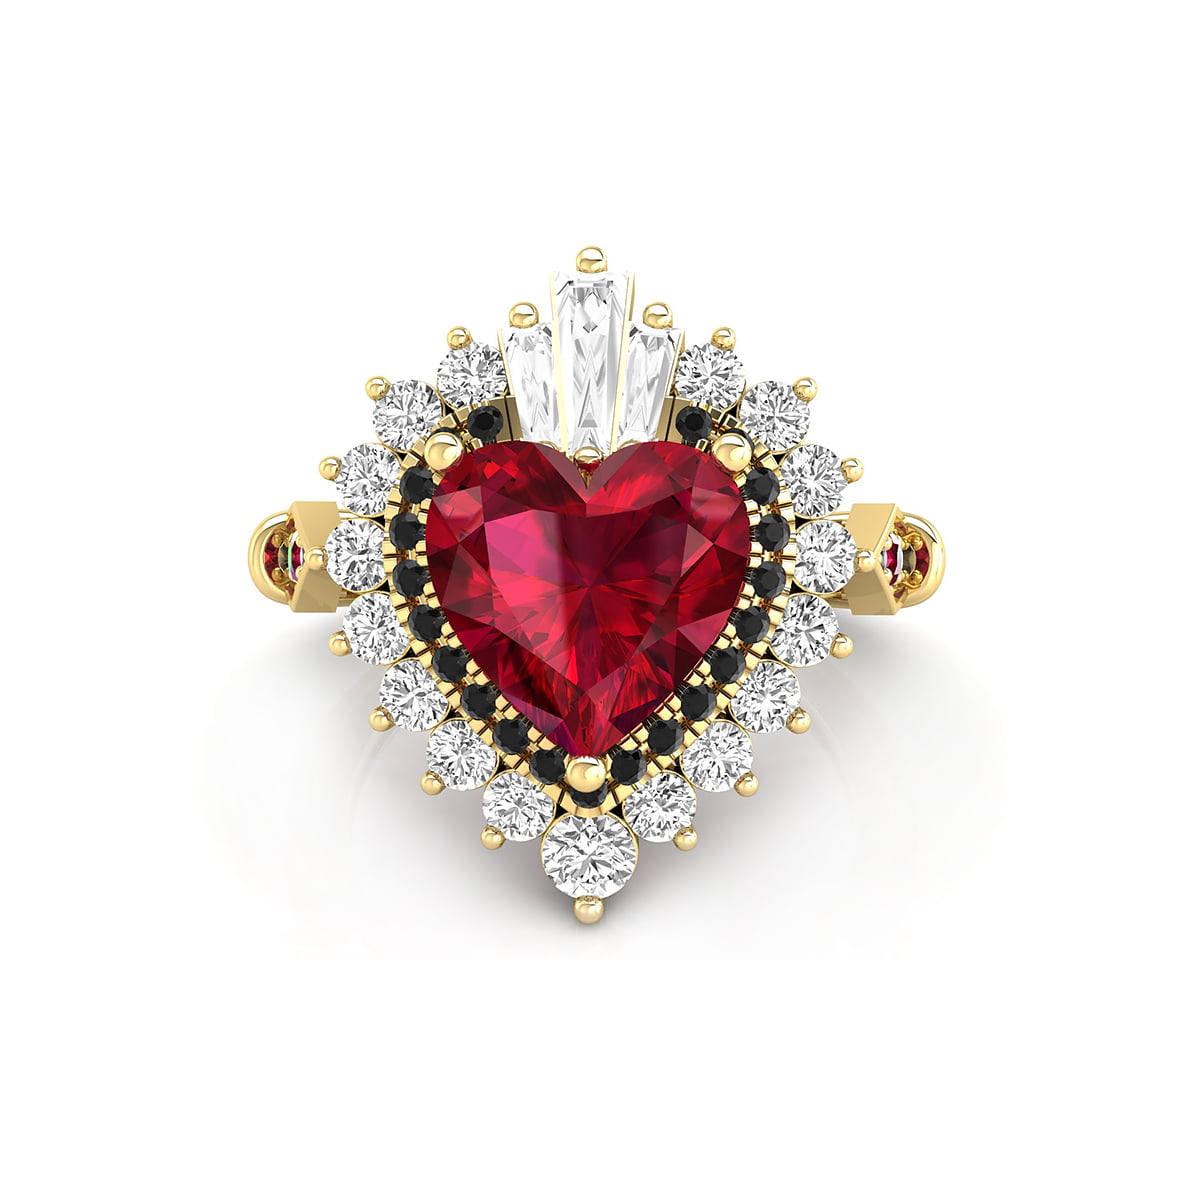 14k yellow gold Heart Shape Garnet Ring With Diamond Halo for women